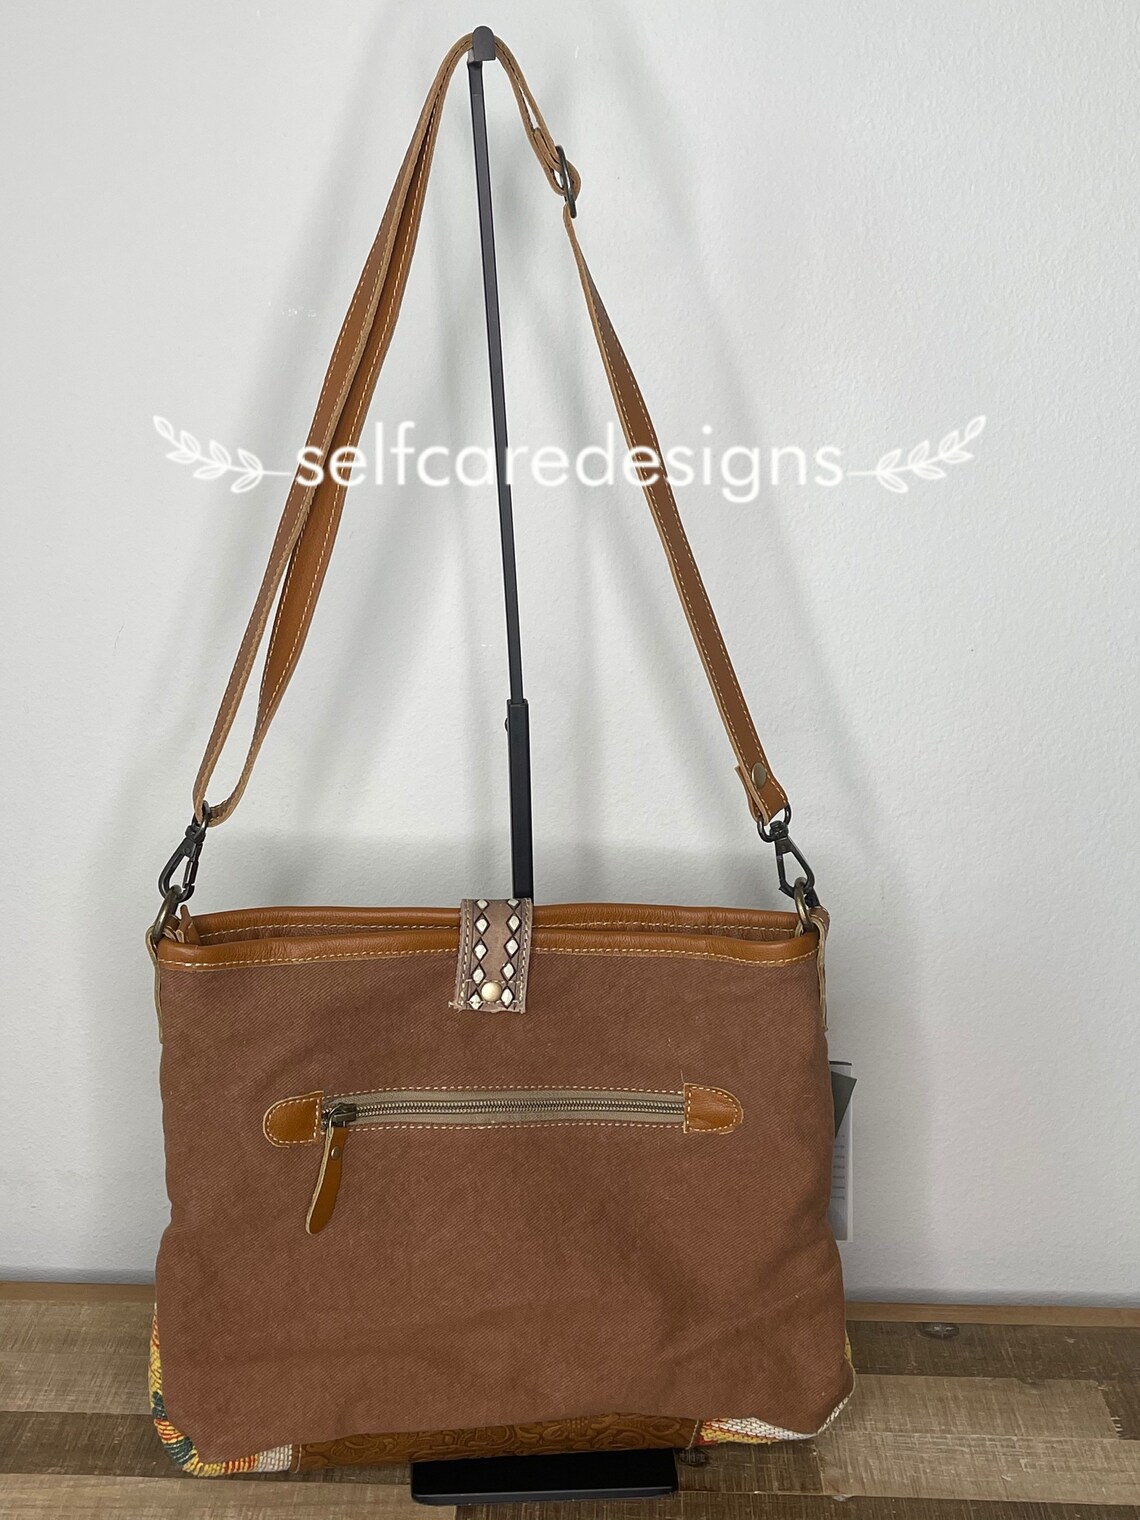 Myra bag Flowery spring bag aztec purse tooled leather | Etsy